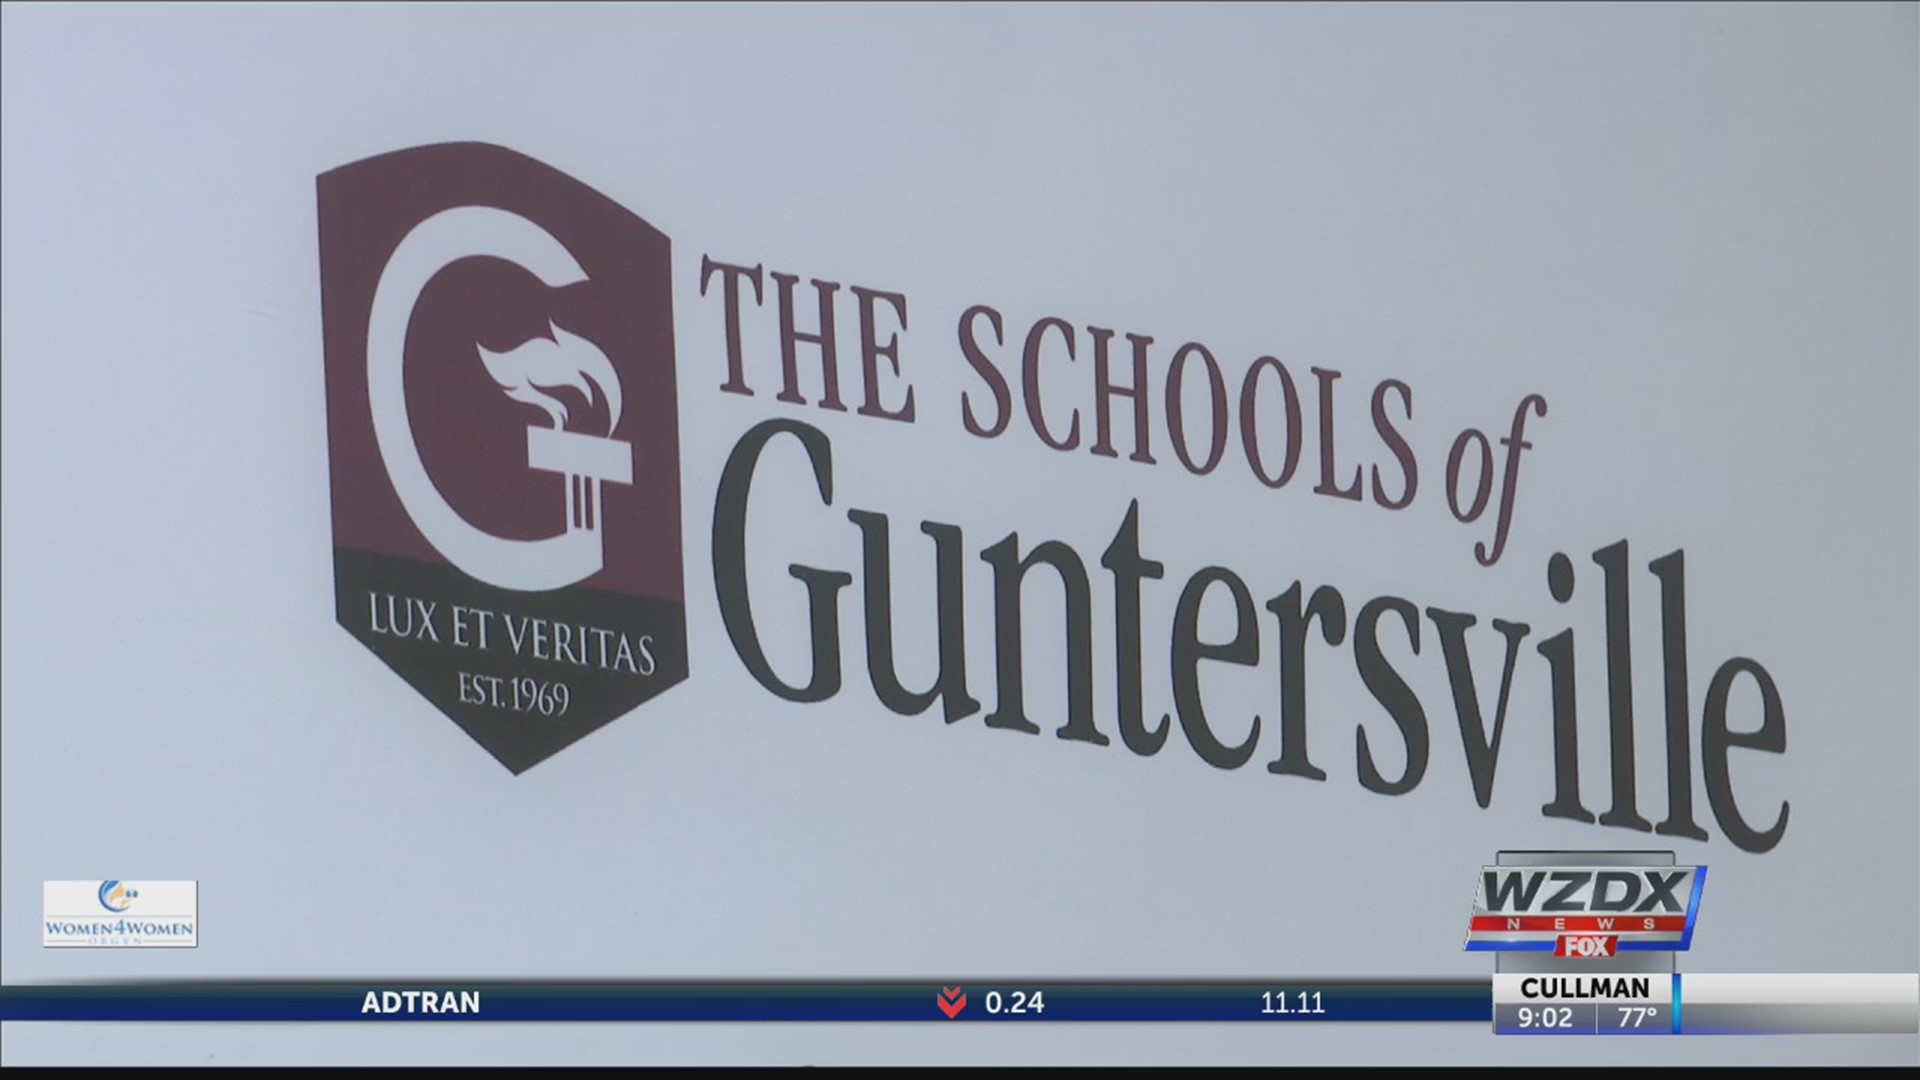 Guntersville tax increase will help improve city schools.